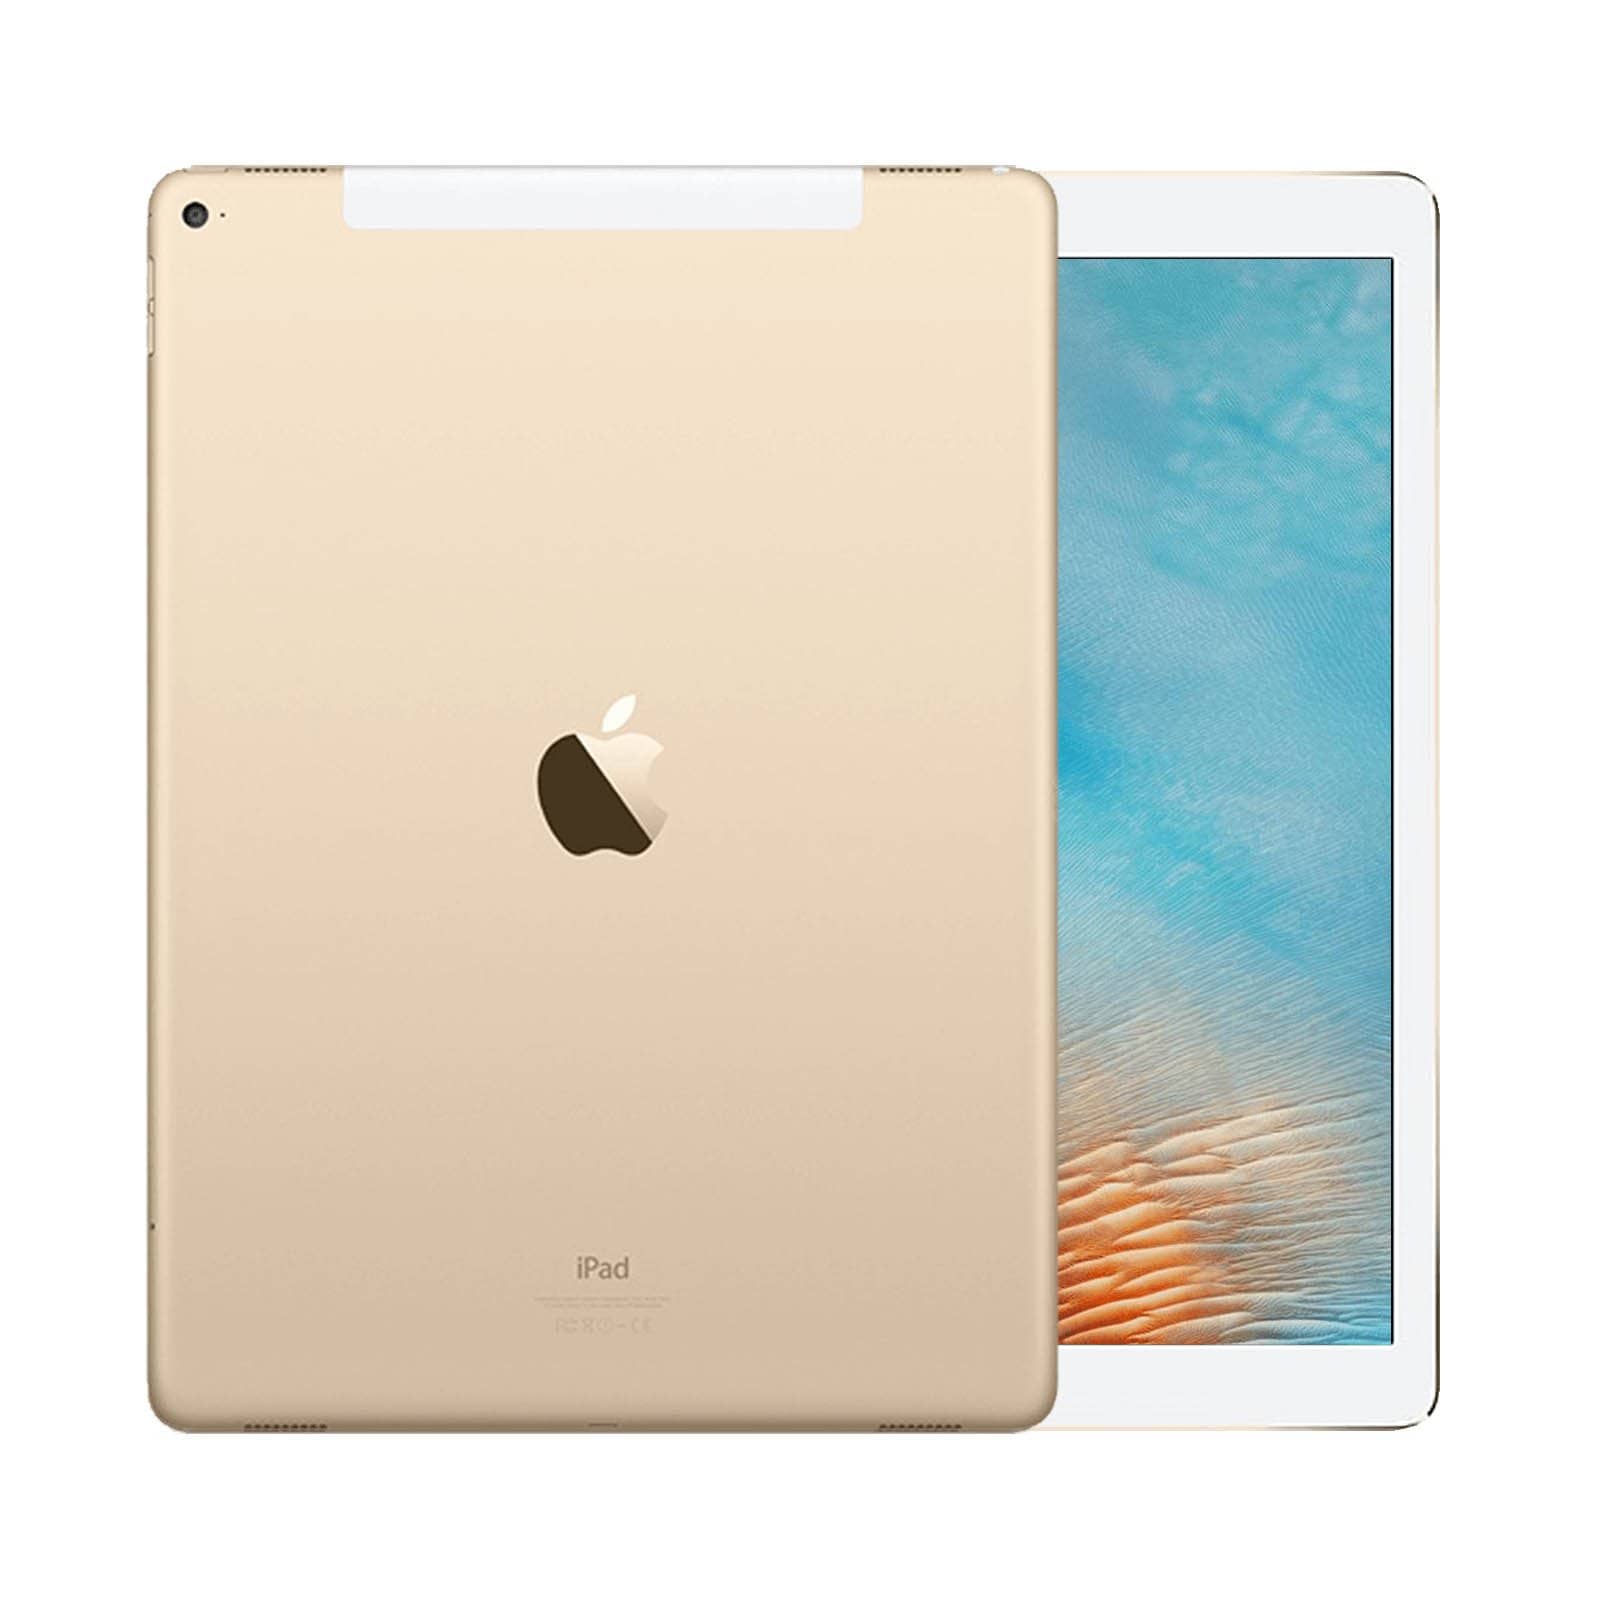 iPad Pro 12.9 Inch 2nd Gen 256GB Gold Very Good - WiFi 256GB Gold Very Good